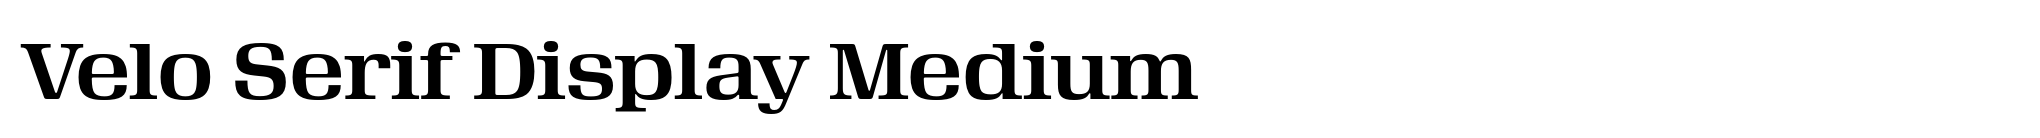 Velo Serif Display Medium image